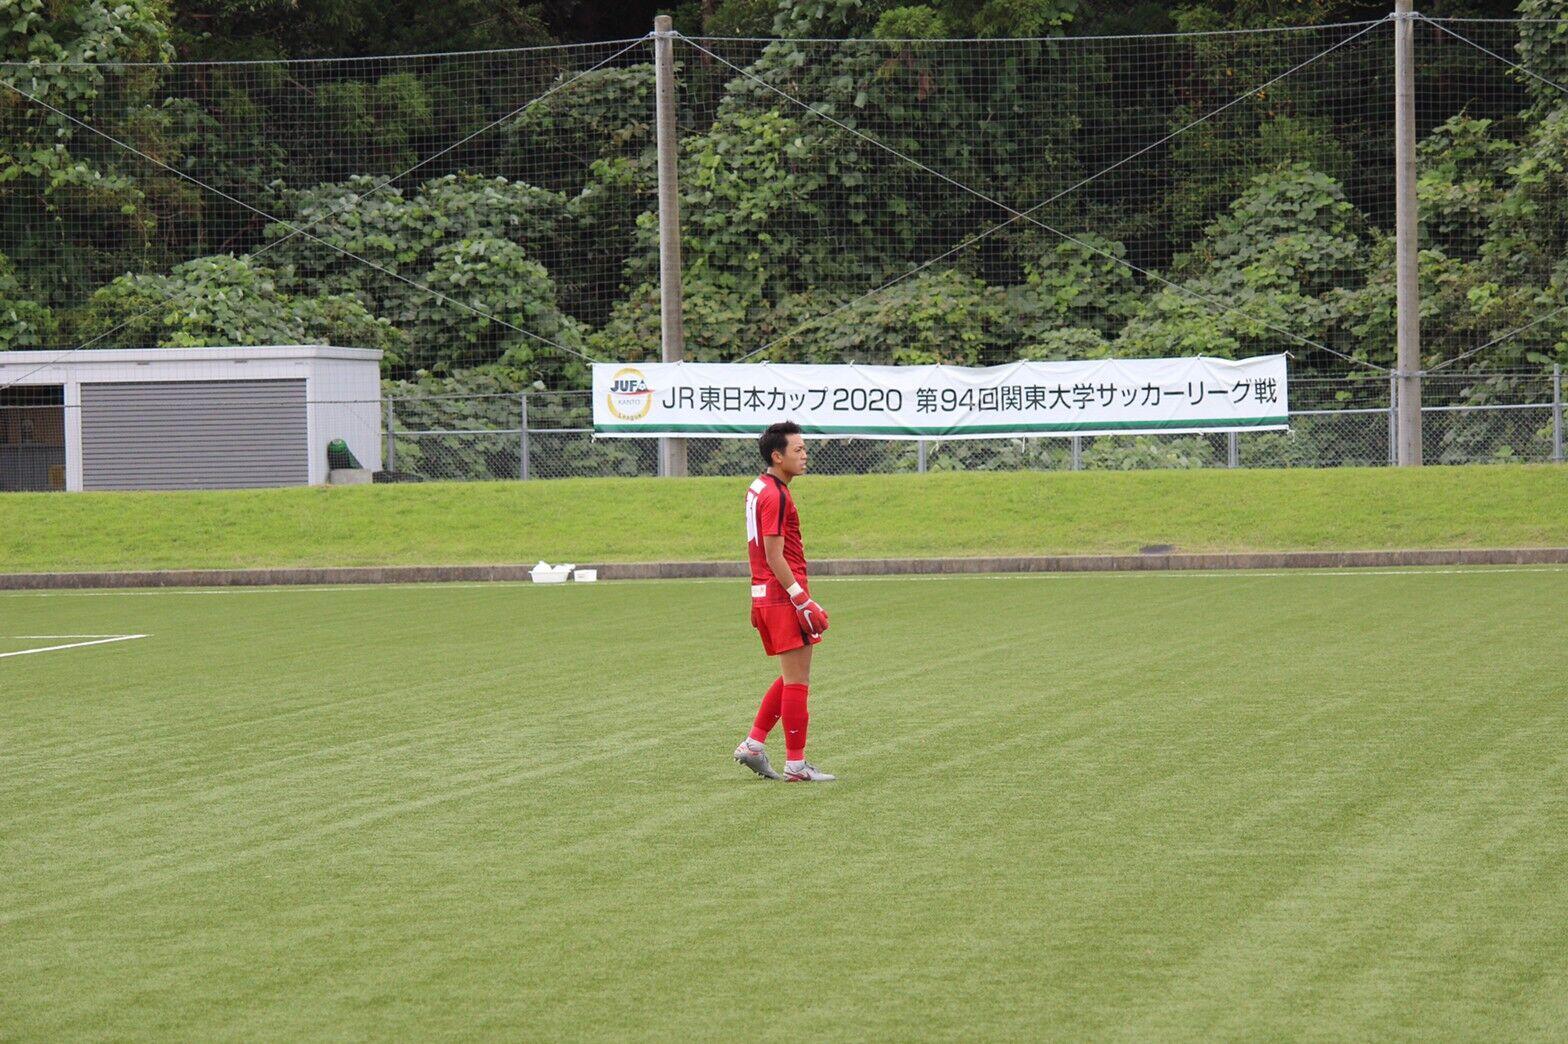 https://football.ku-sports.jp/blog/photoreport/images/20200917194449.jpg